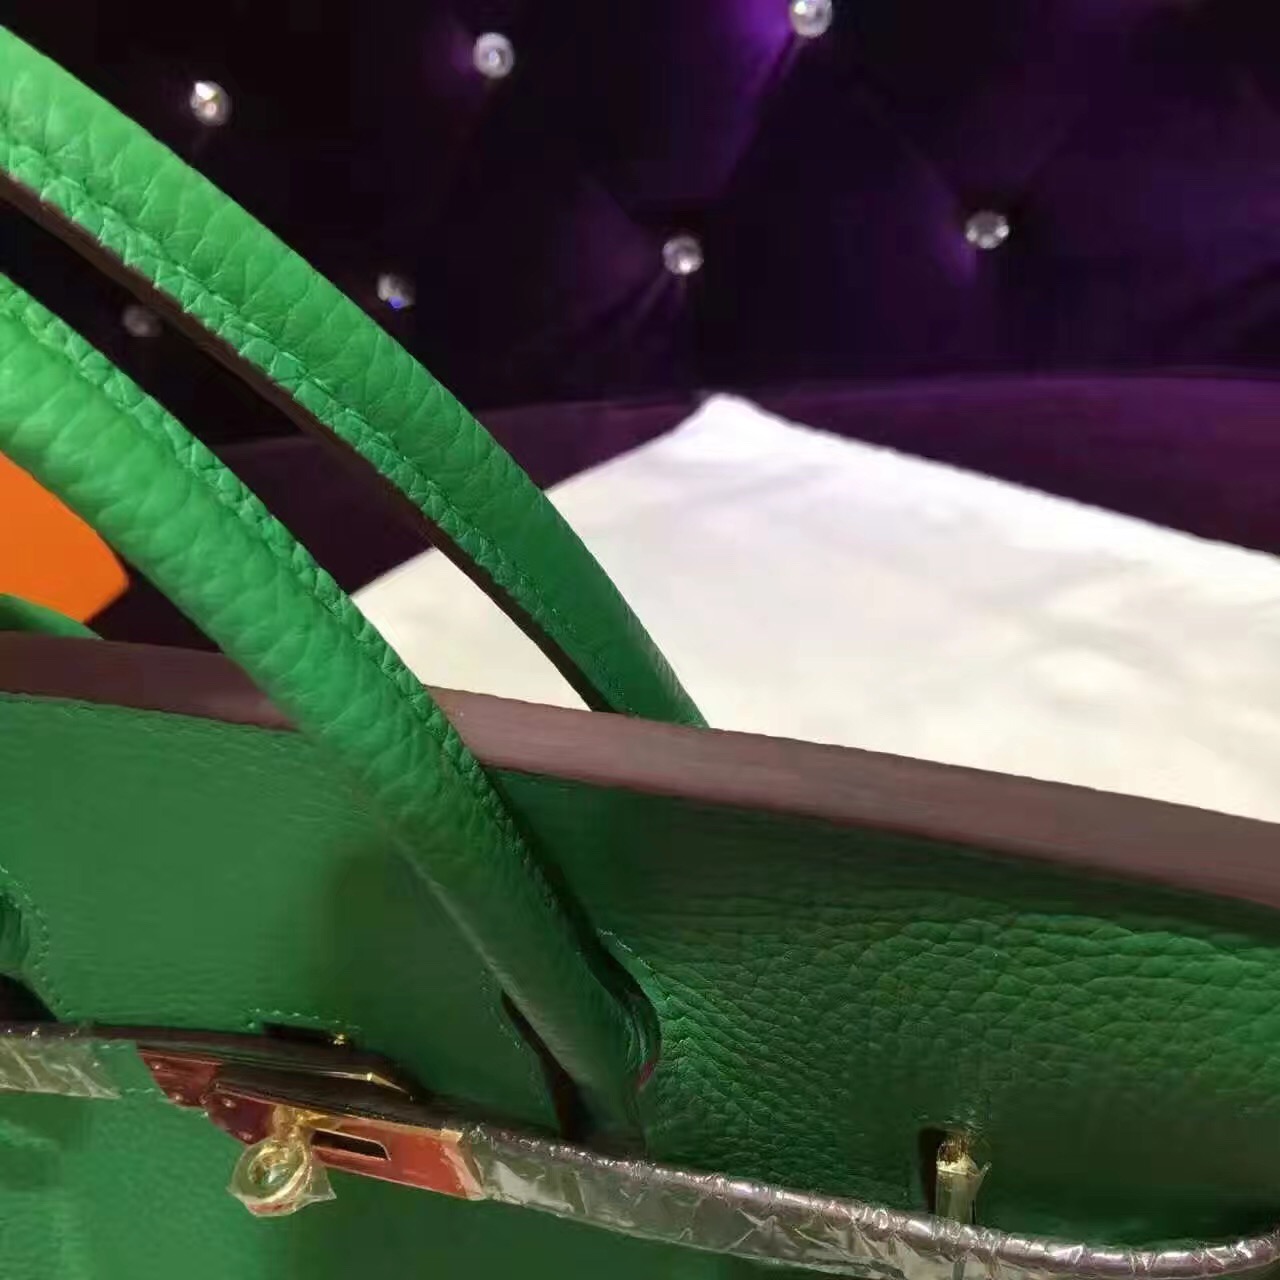 Hermes green Birkin handbags